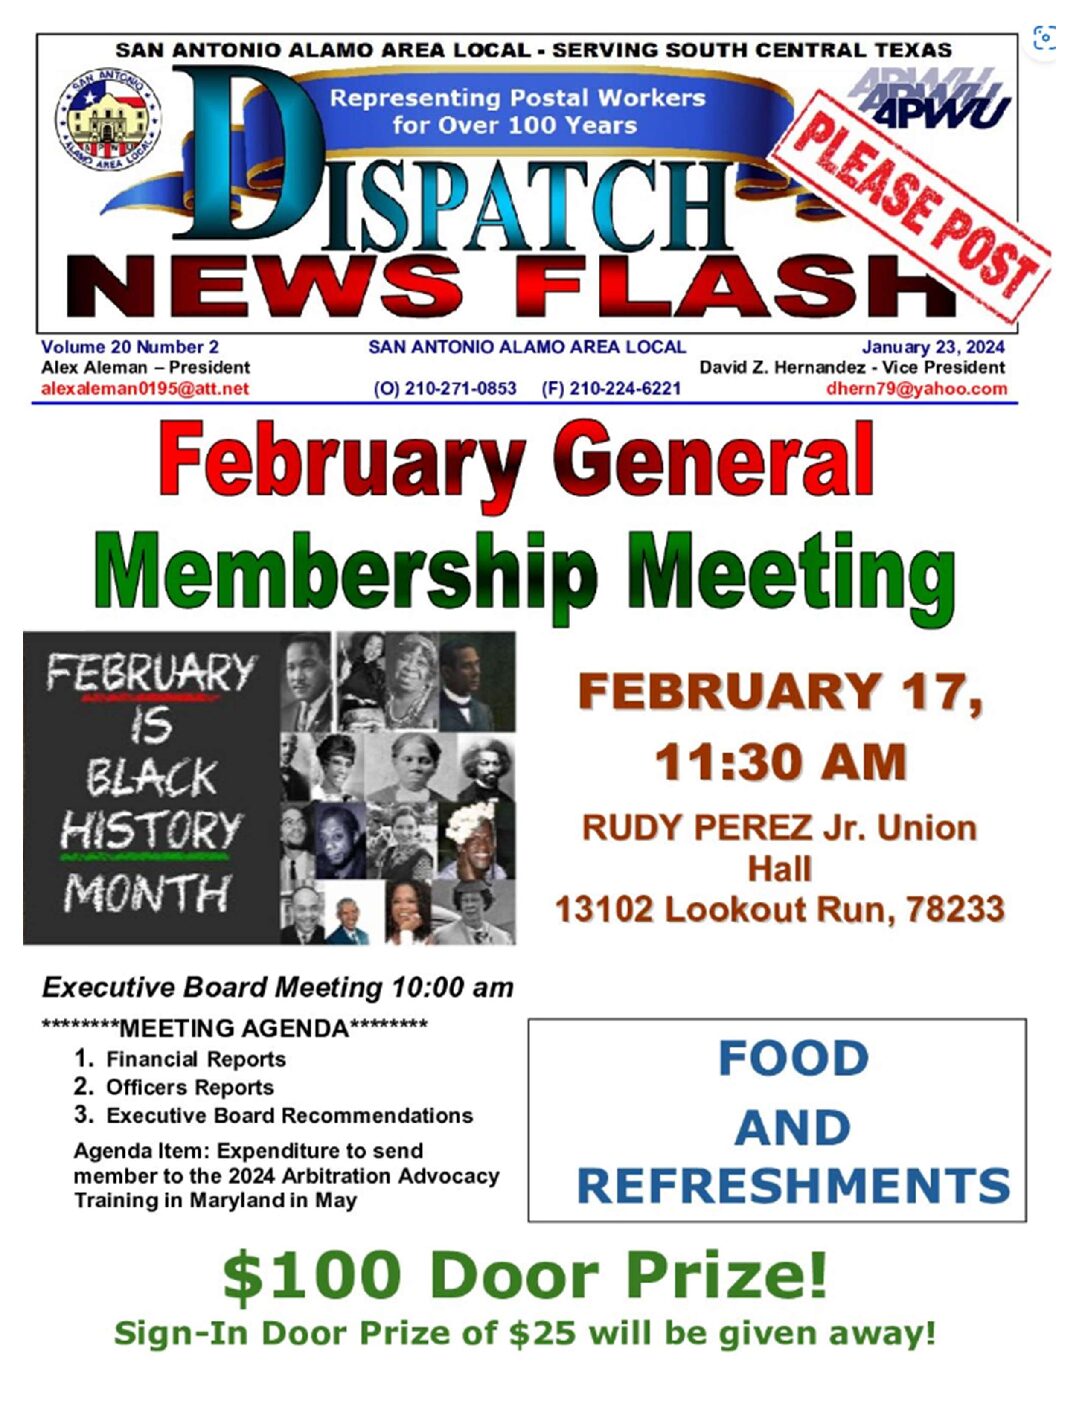 NewsFlash 20-2 February General Membership Meeting - 